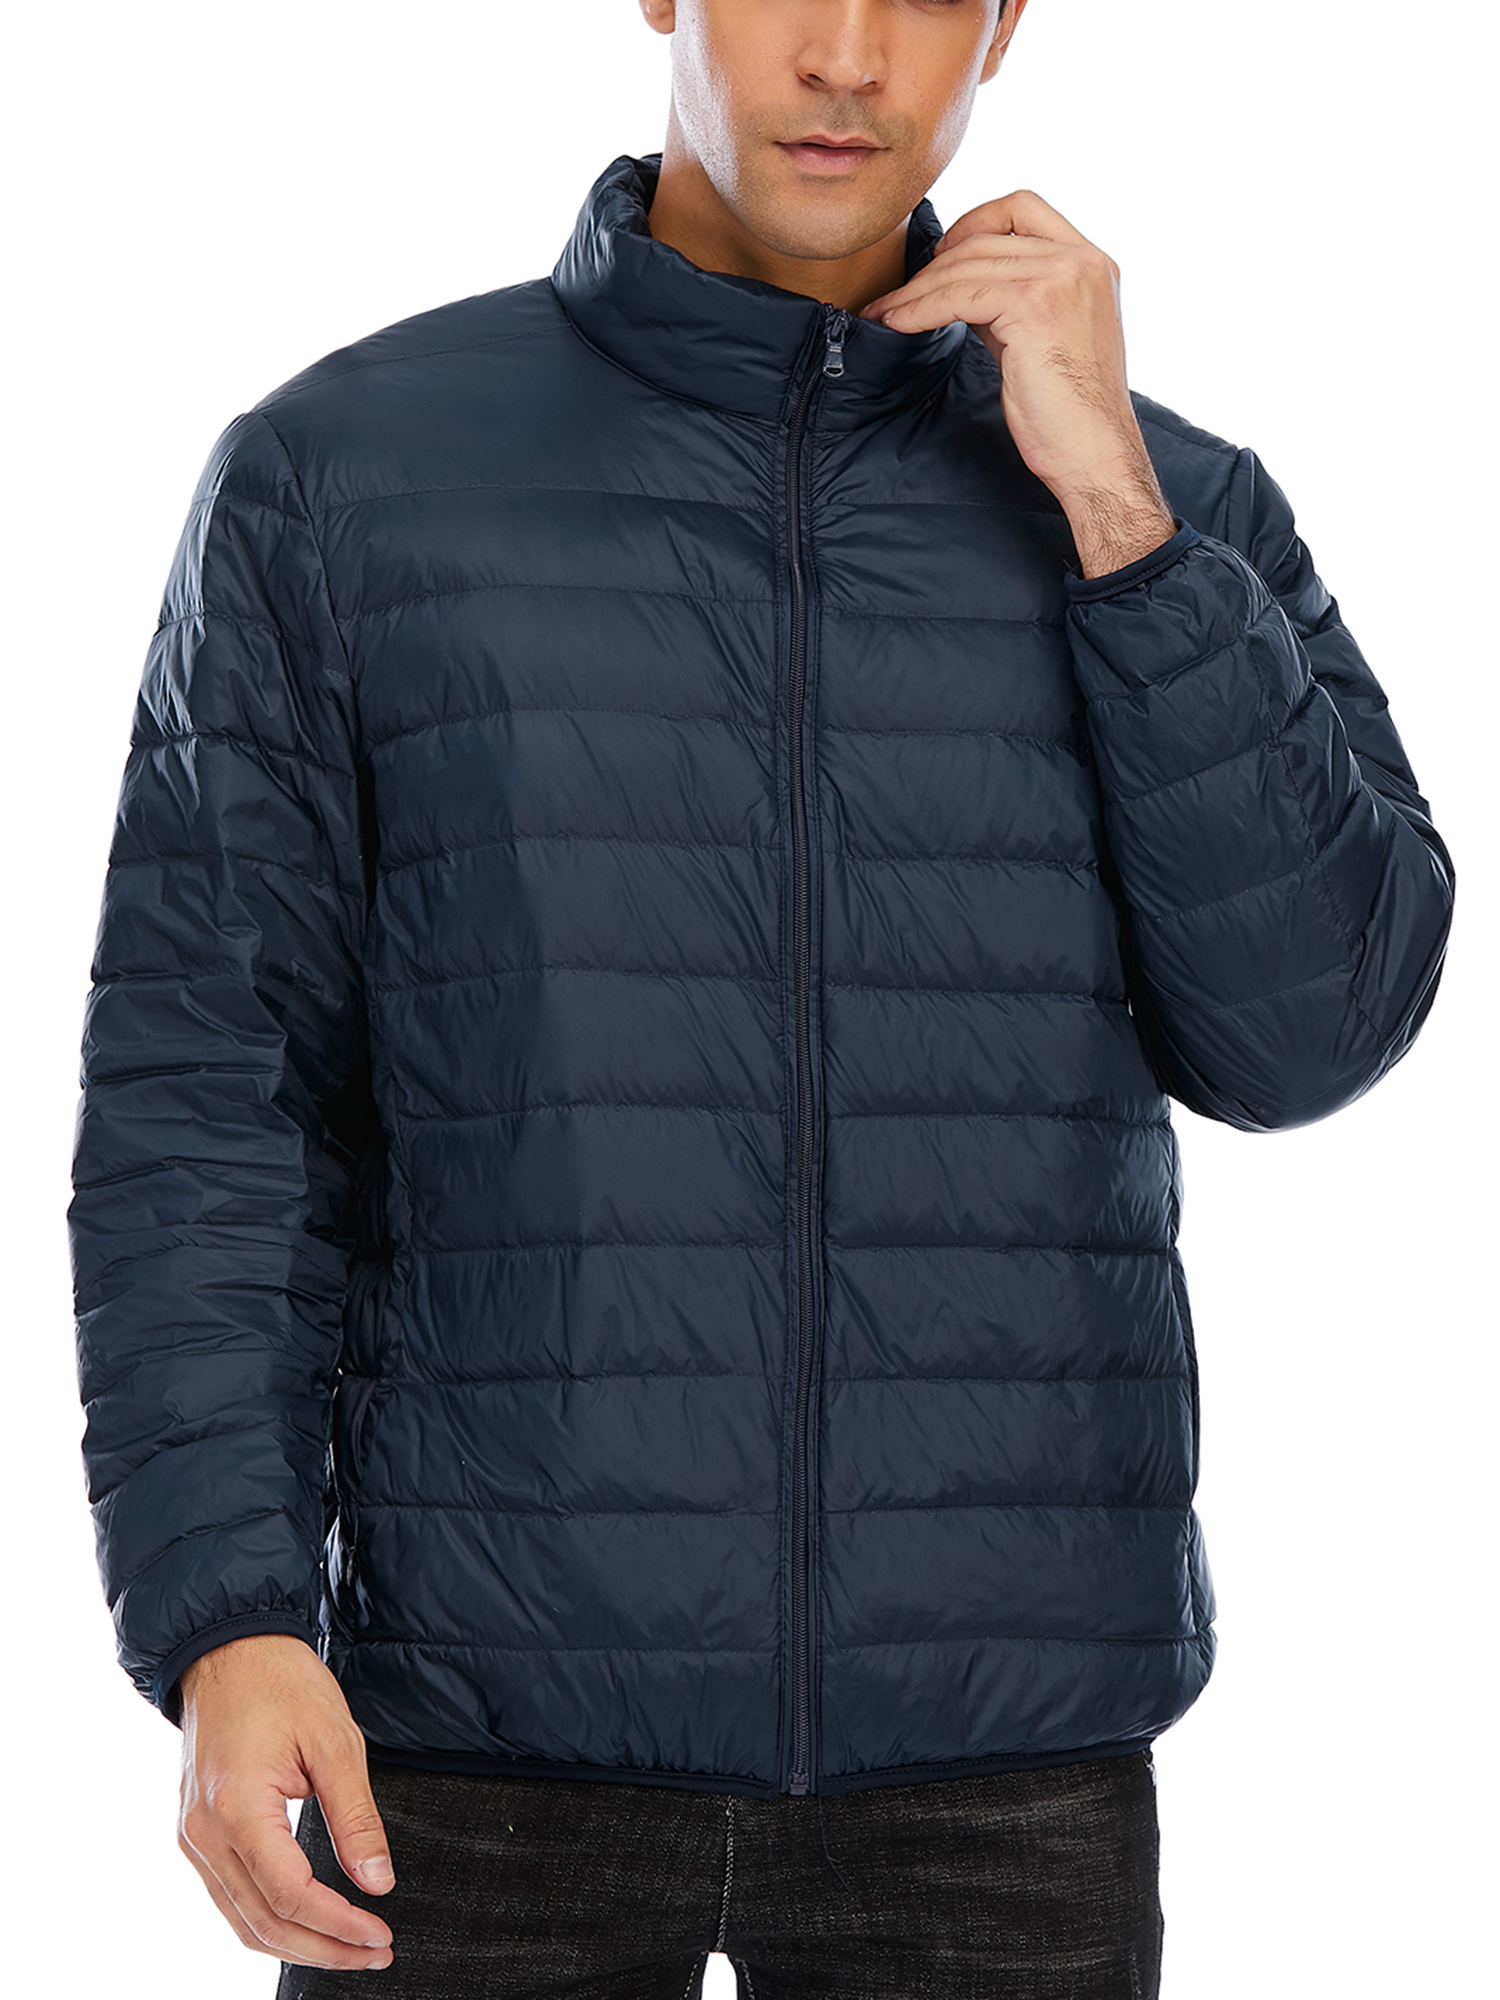 SAYFUT Men's Down Winter Packable Jacket Big & Tall Sizes M-4XL Outwear Jacket Coat Black/Blue/Gray - image 1 of 8